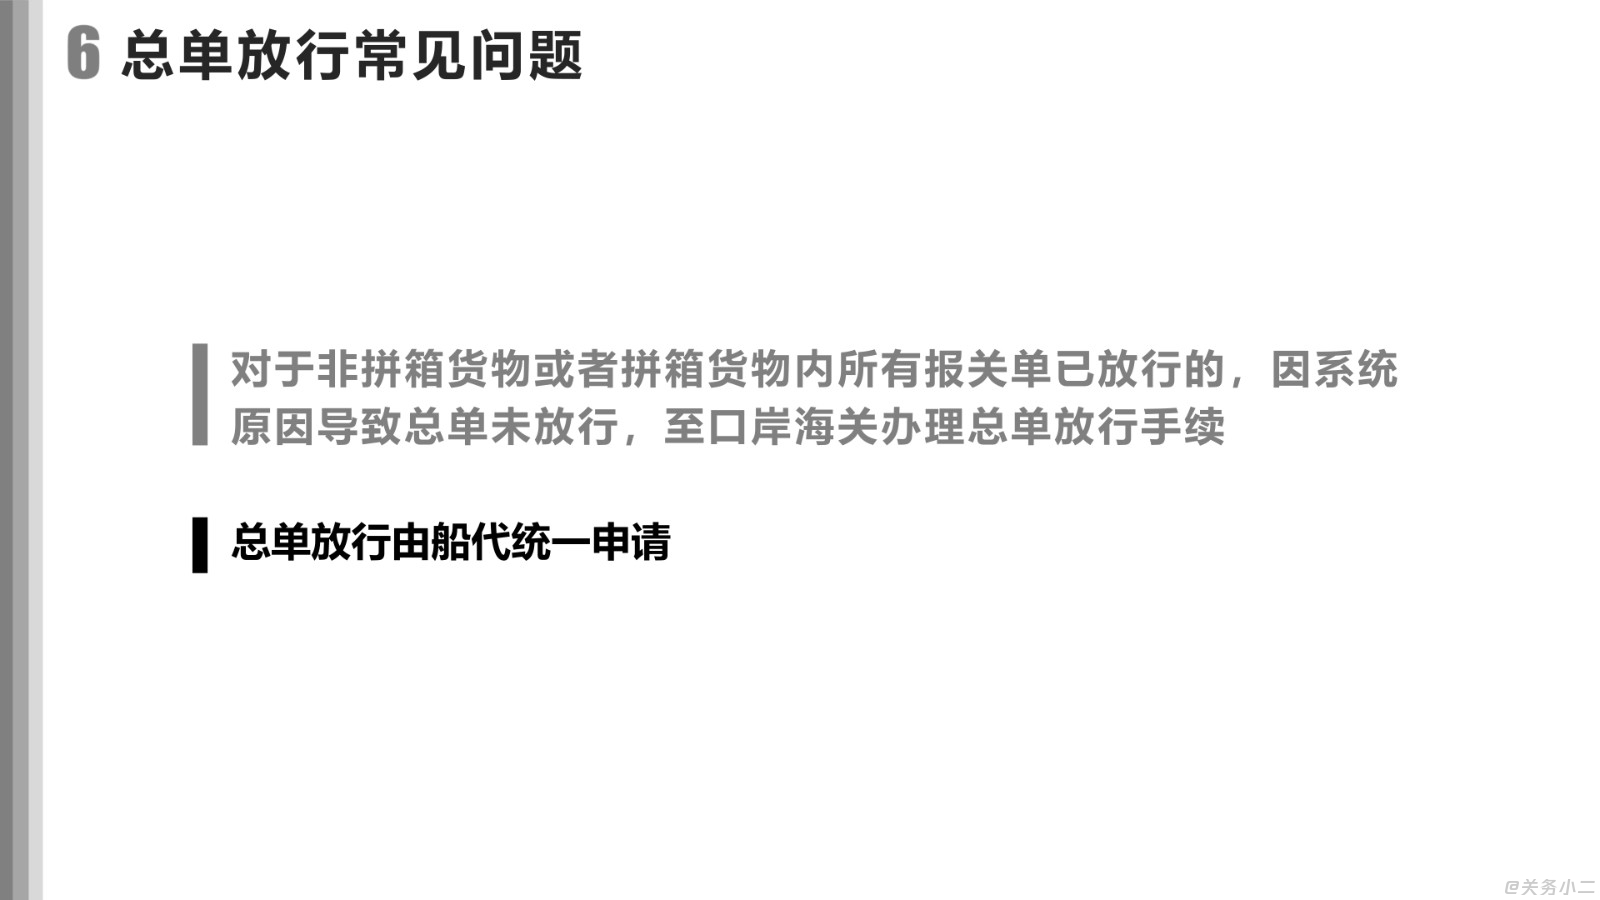 PPT-上海海关海运出口放行信息切换安排宣贯会_11.jpg